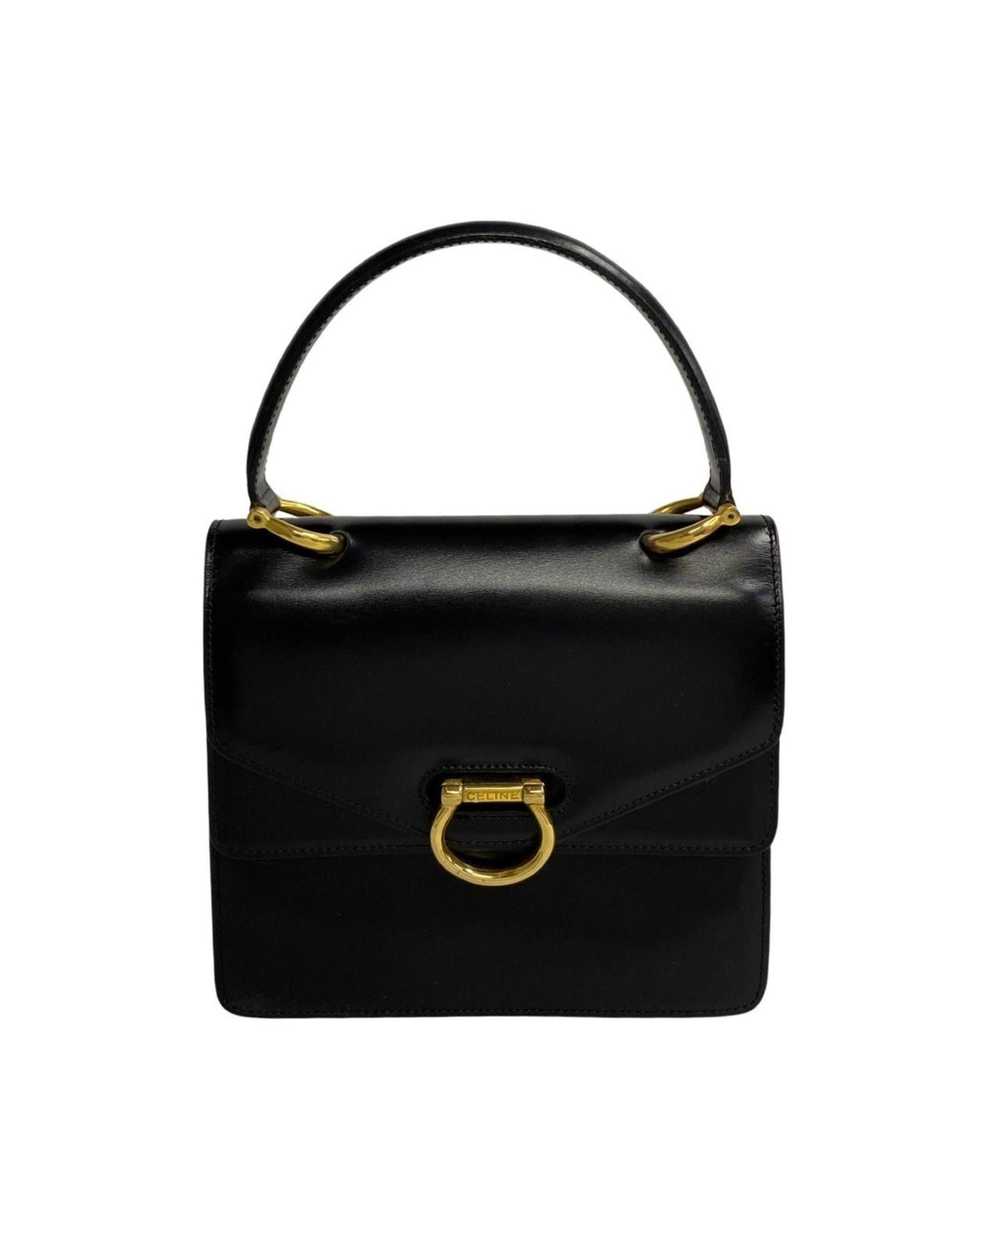 Celine Black Pony-style Calfskin Handbag - image 1